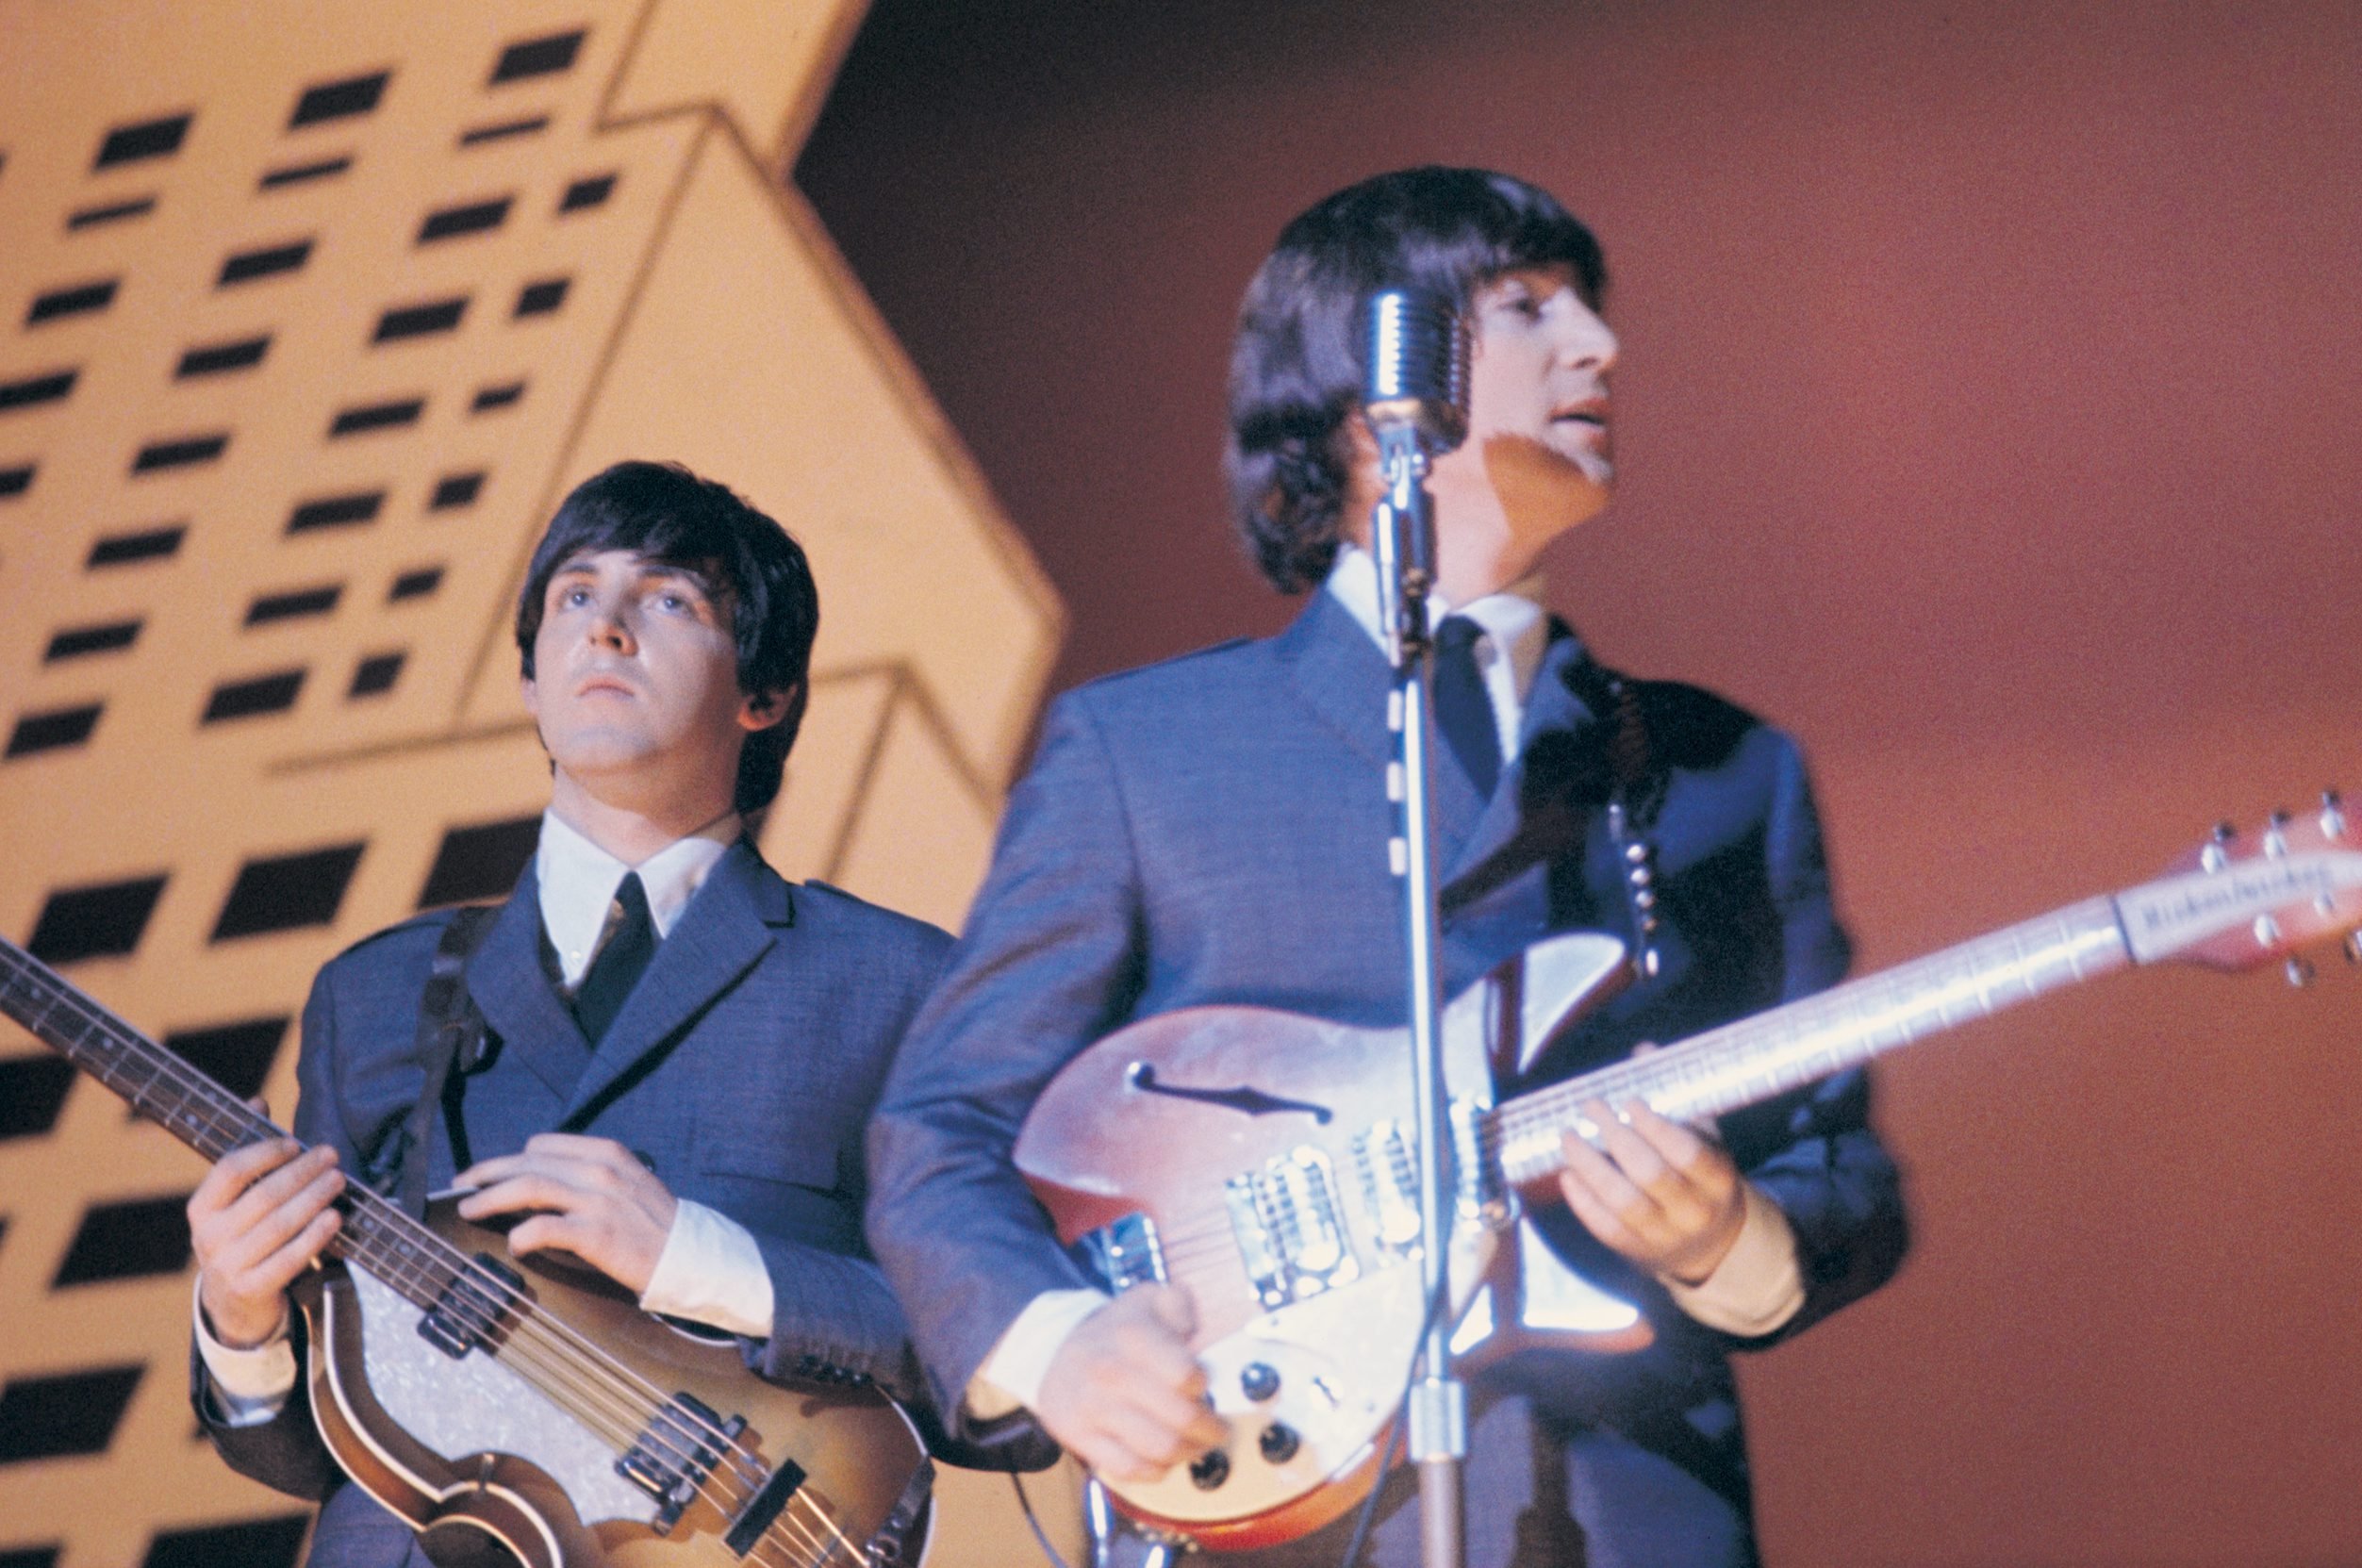 Paul McCartney and John Lennon perform during The Beatles' American tour